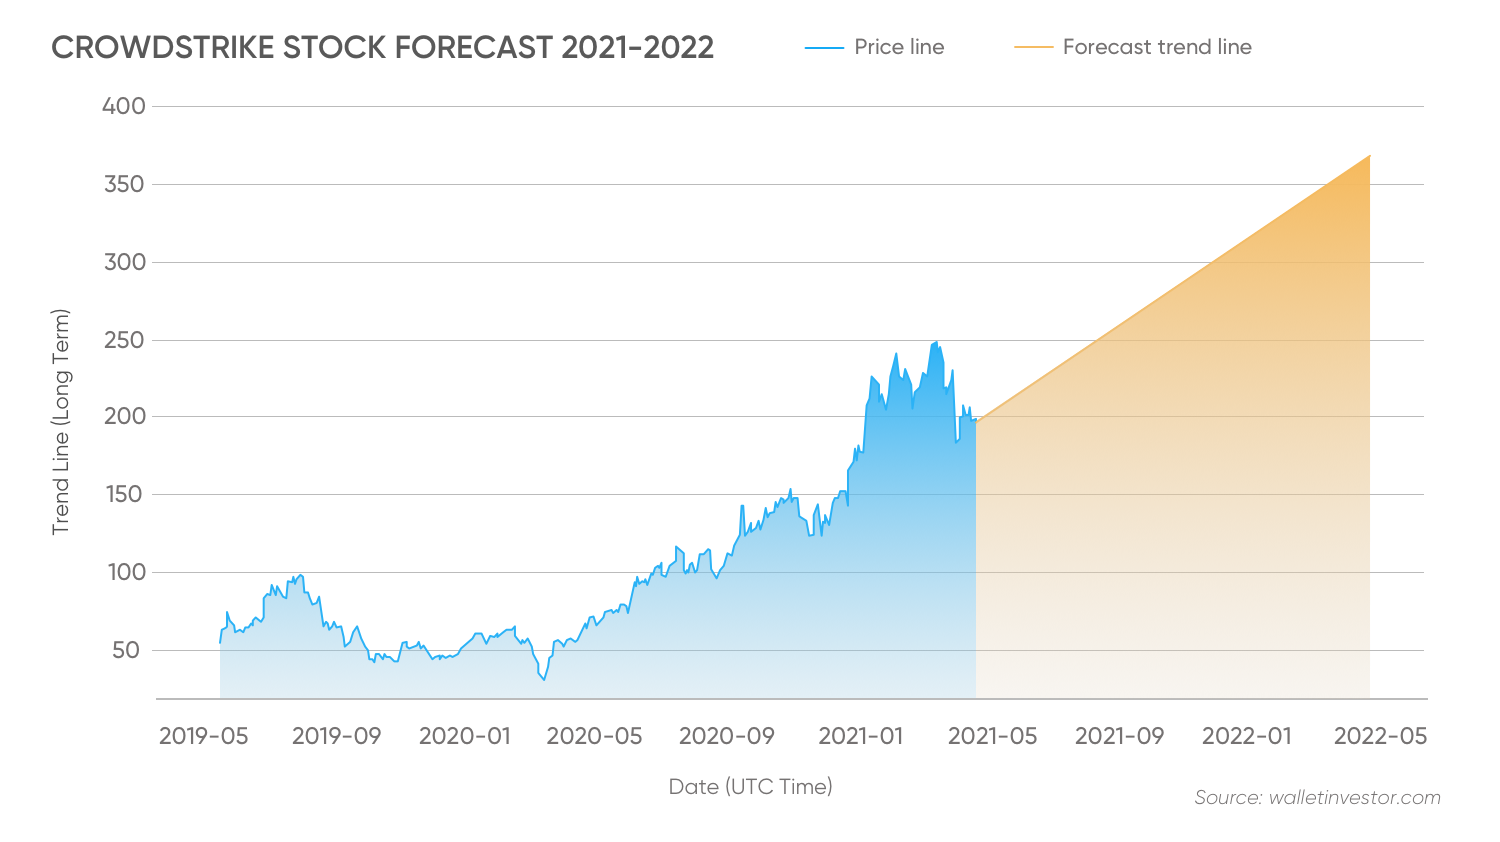 Crowdstrike stock forecast 2021-2022